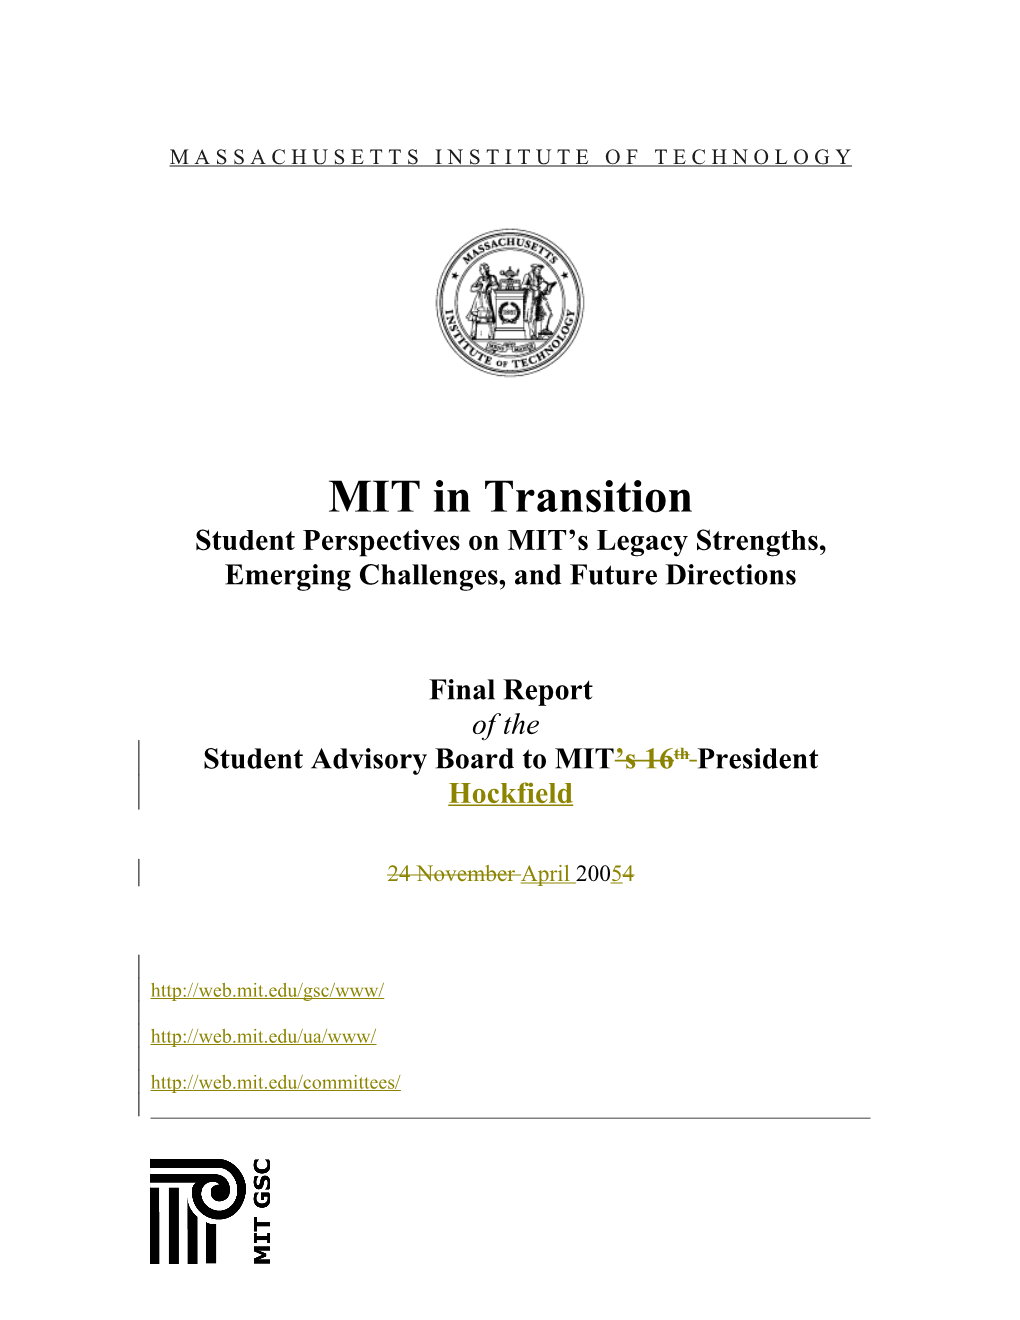 Student Advisory Board to MIT President Hockfield